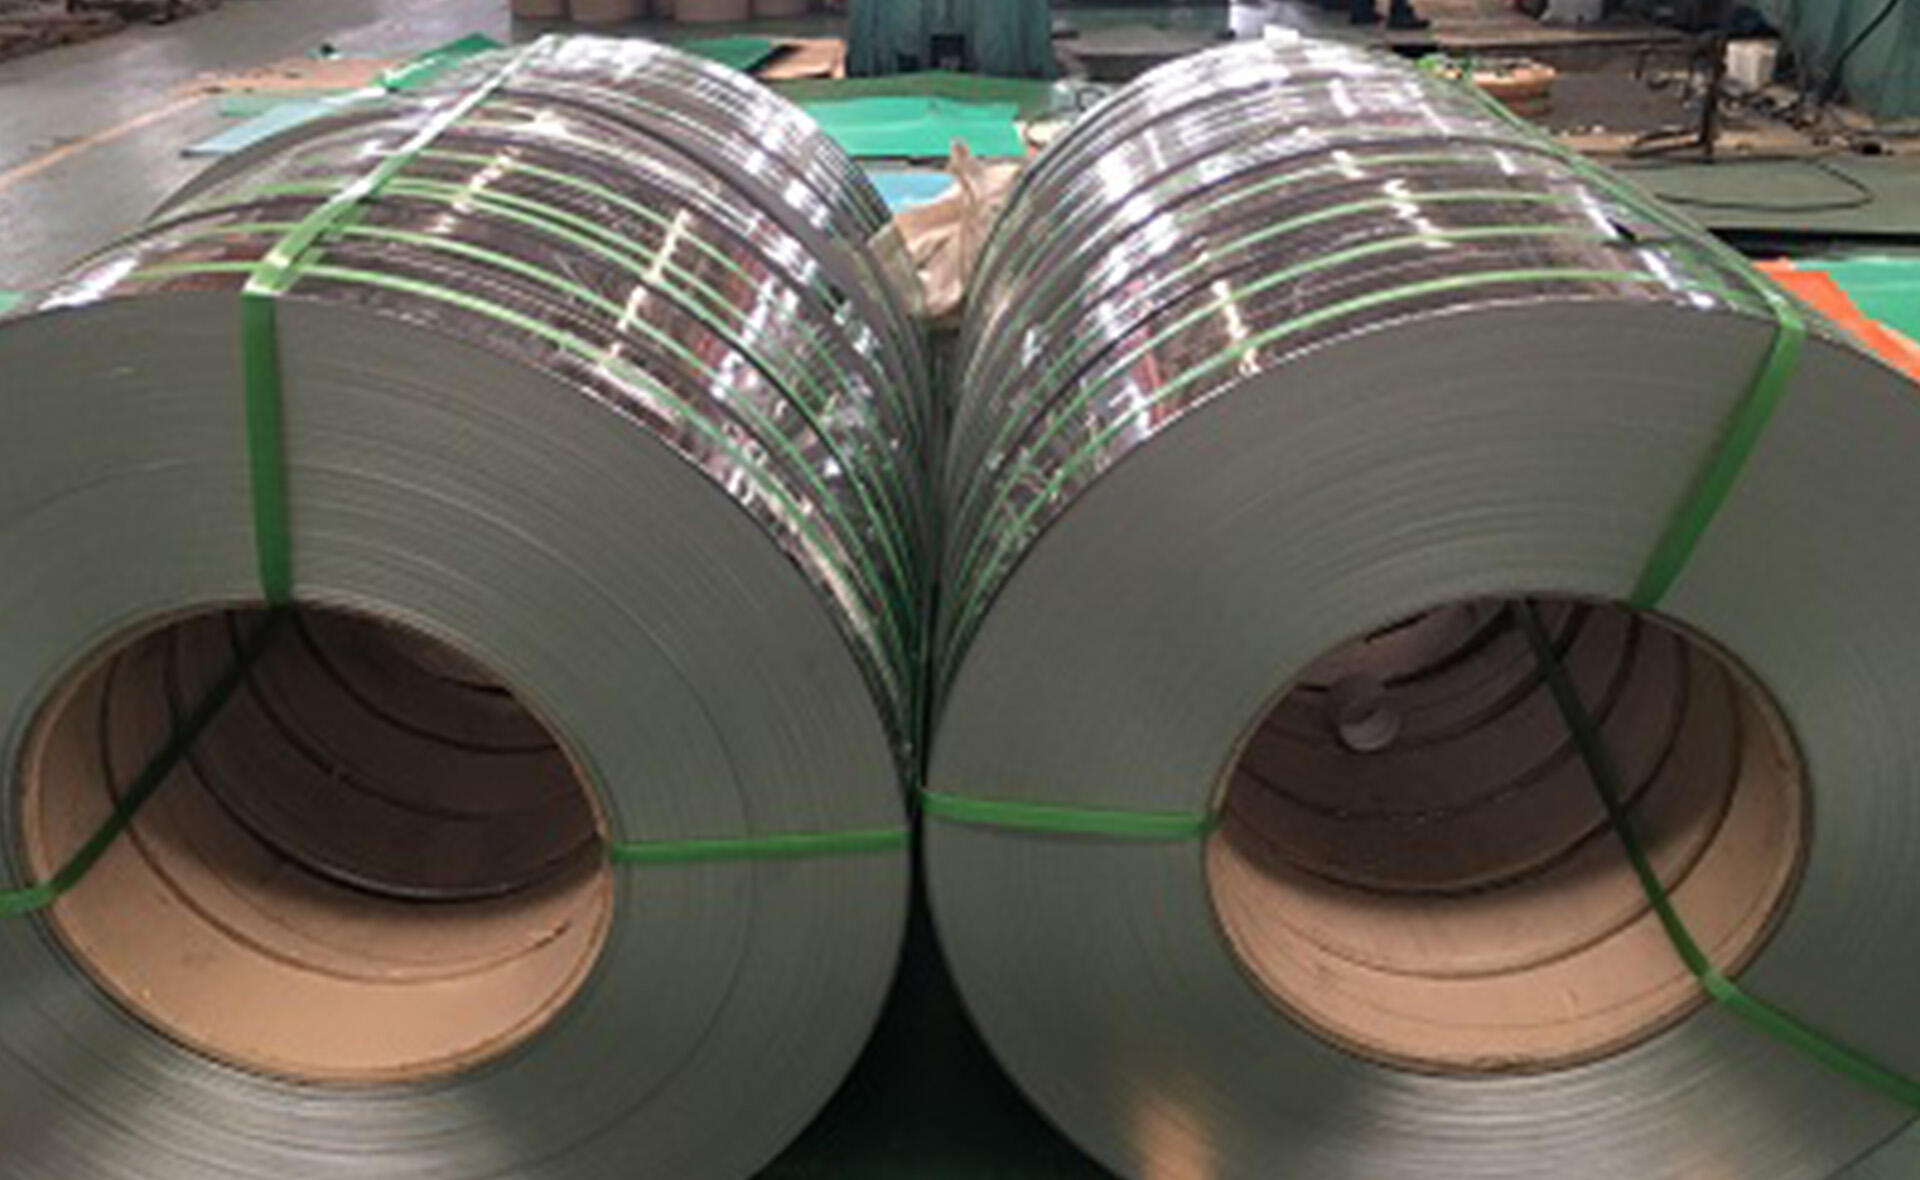 Eksporter 30 tons 304 rustfrit stålbånd til Iran